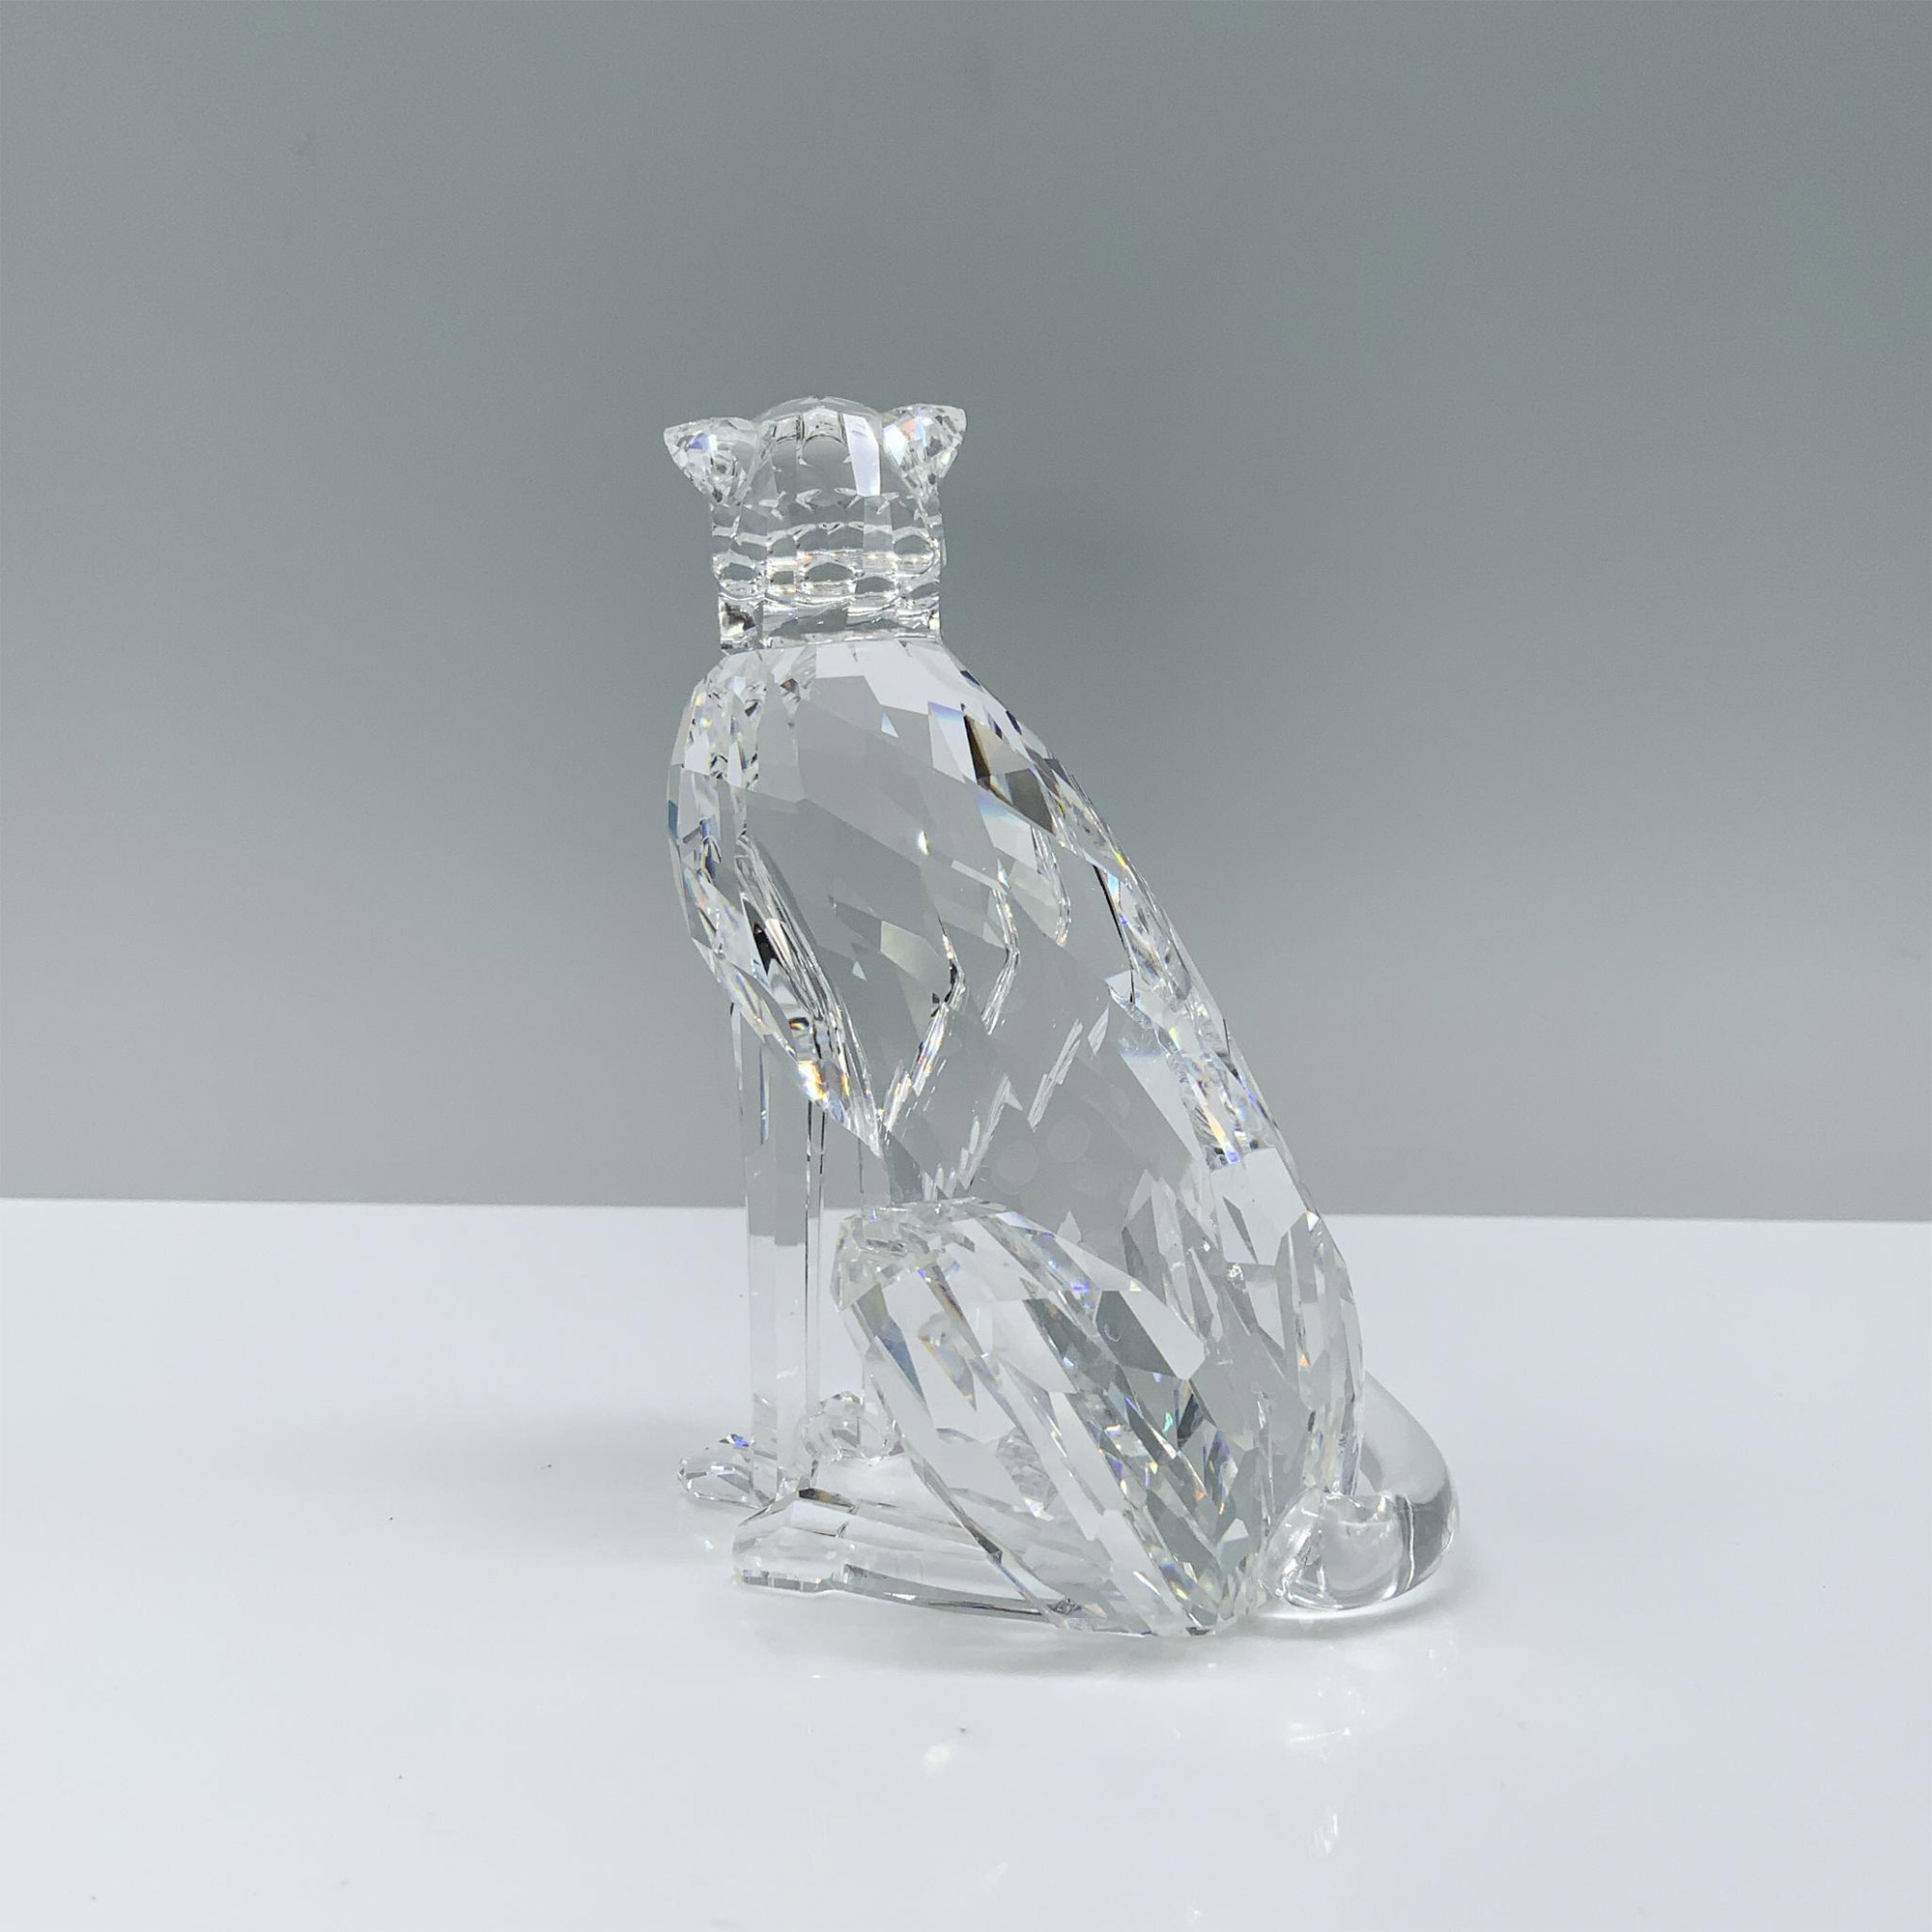 Swarovski Crystal Figurine, Cheetah 183225 - Image 2 of 3